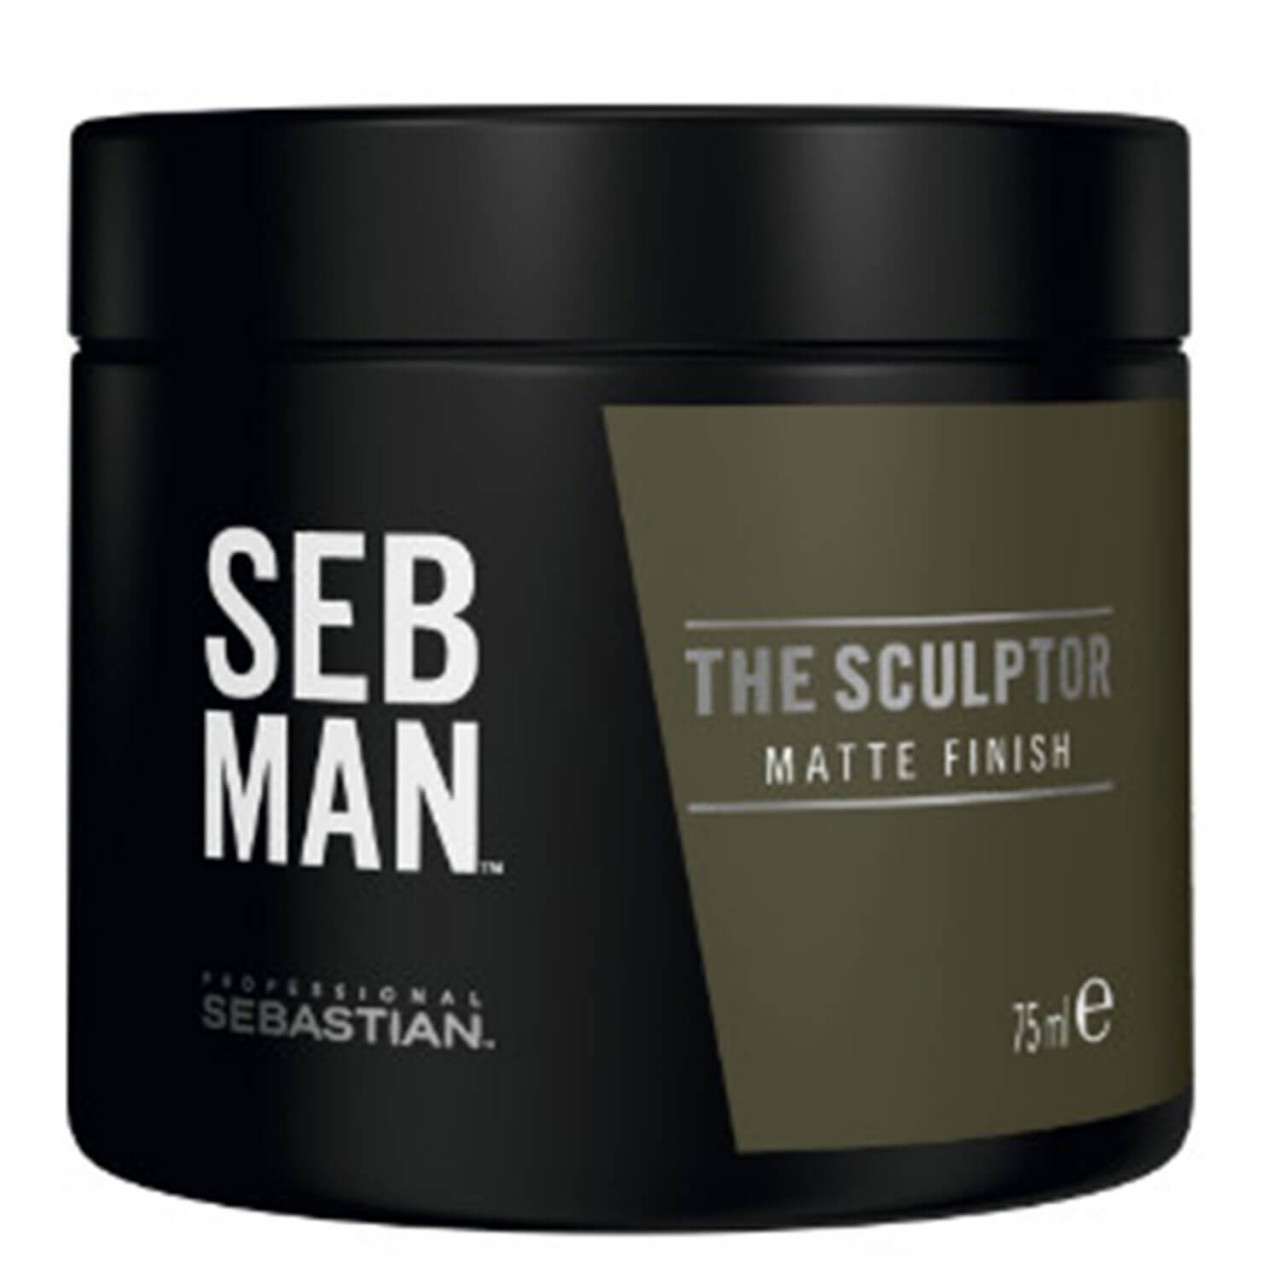 SEB MAN - The Sculptor Matte Finish von Sebastian